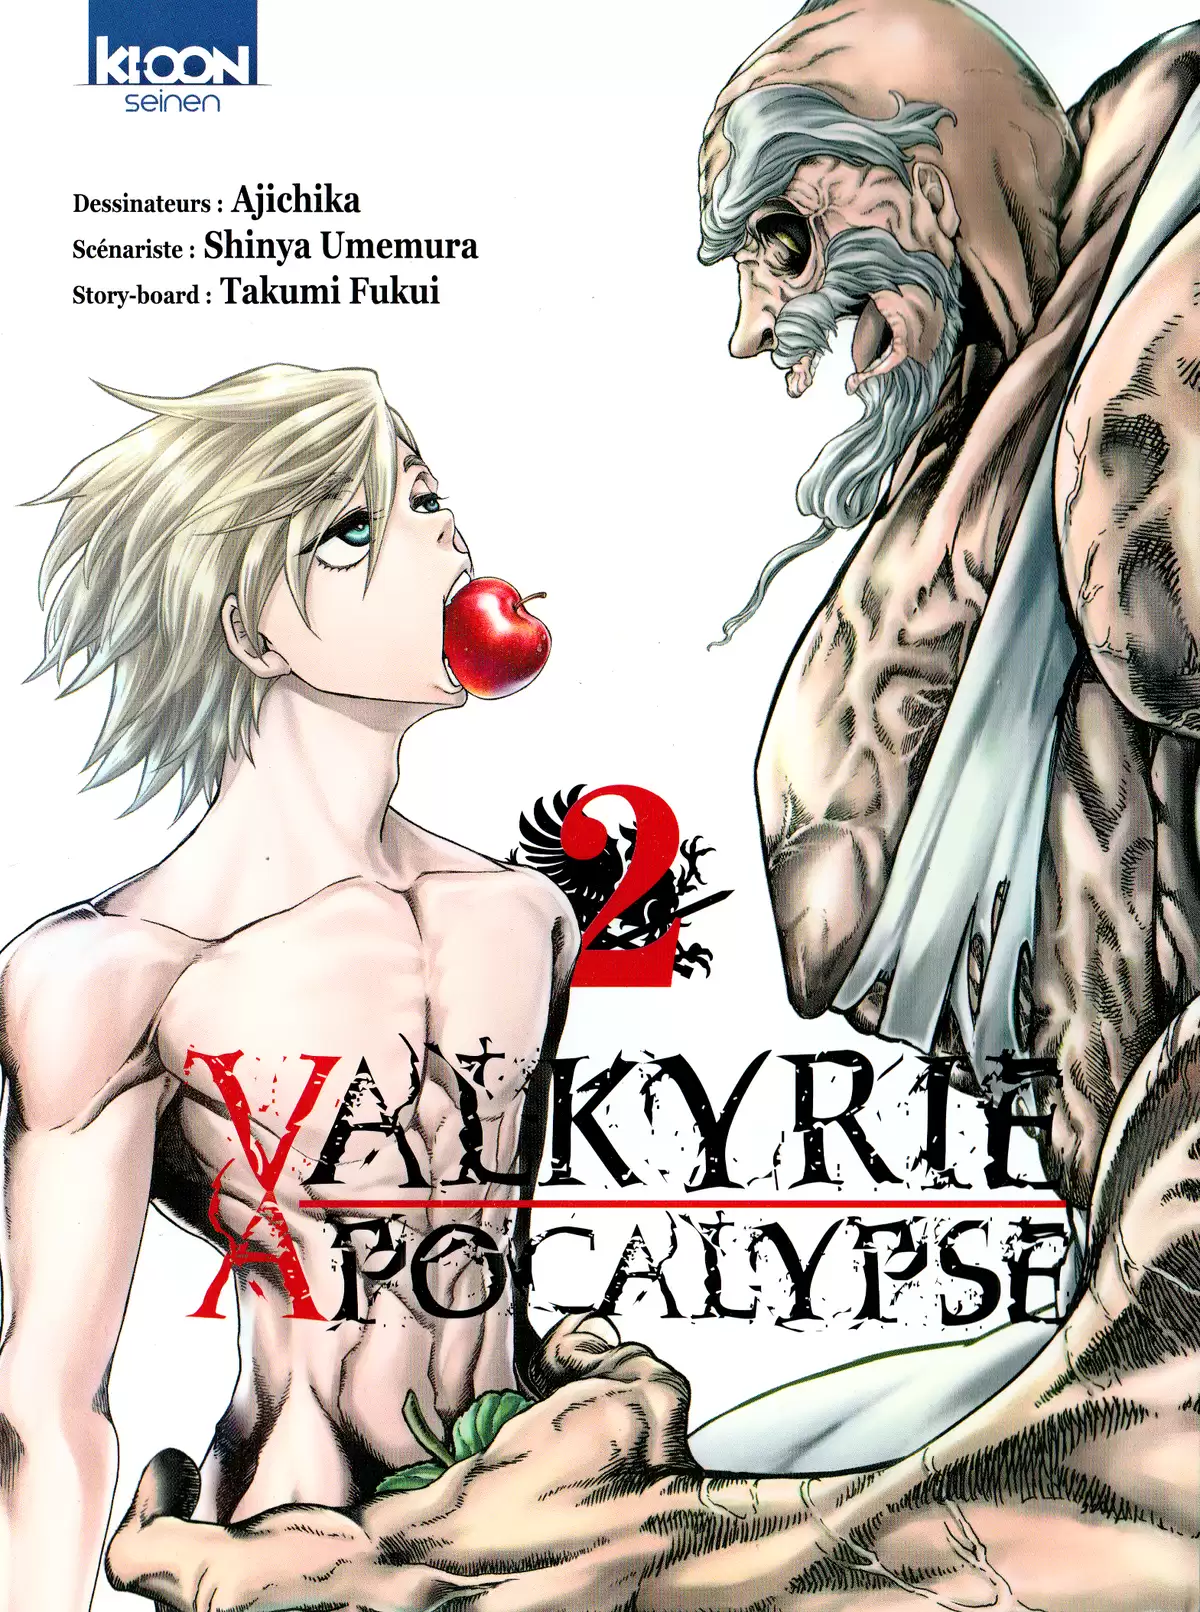 Valkyrie Apocalypse Volume 2 page 1